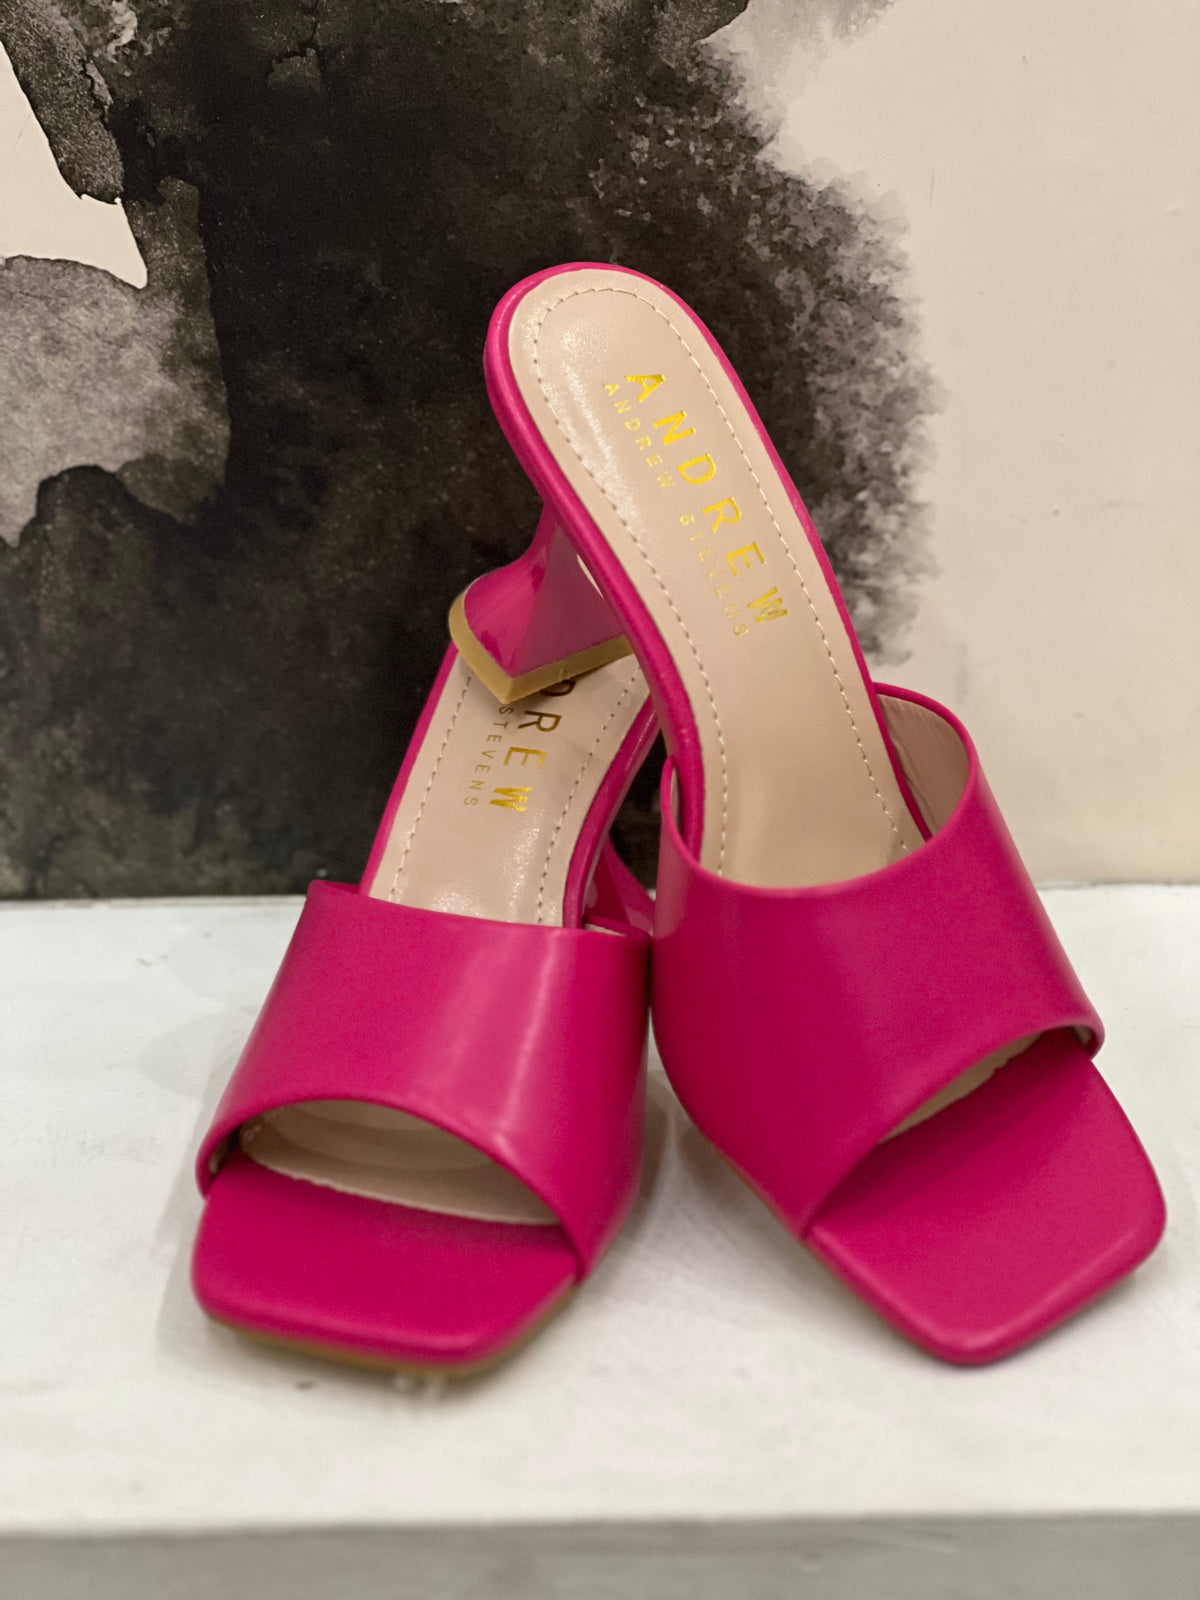 Freya Hot Pink Sandal-online exclusive